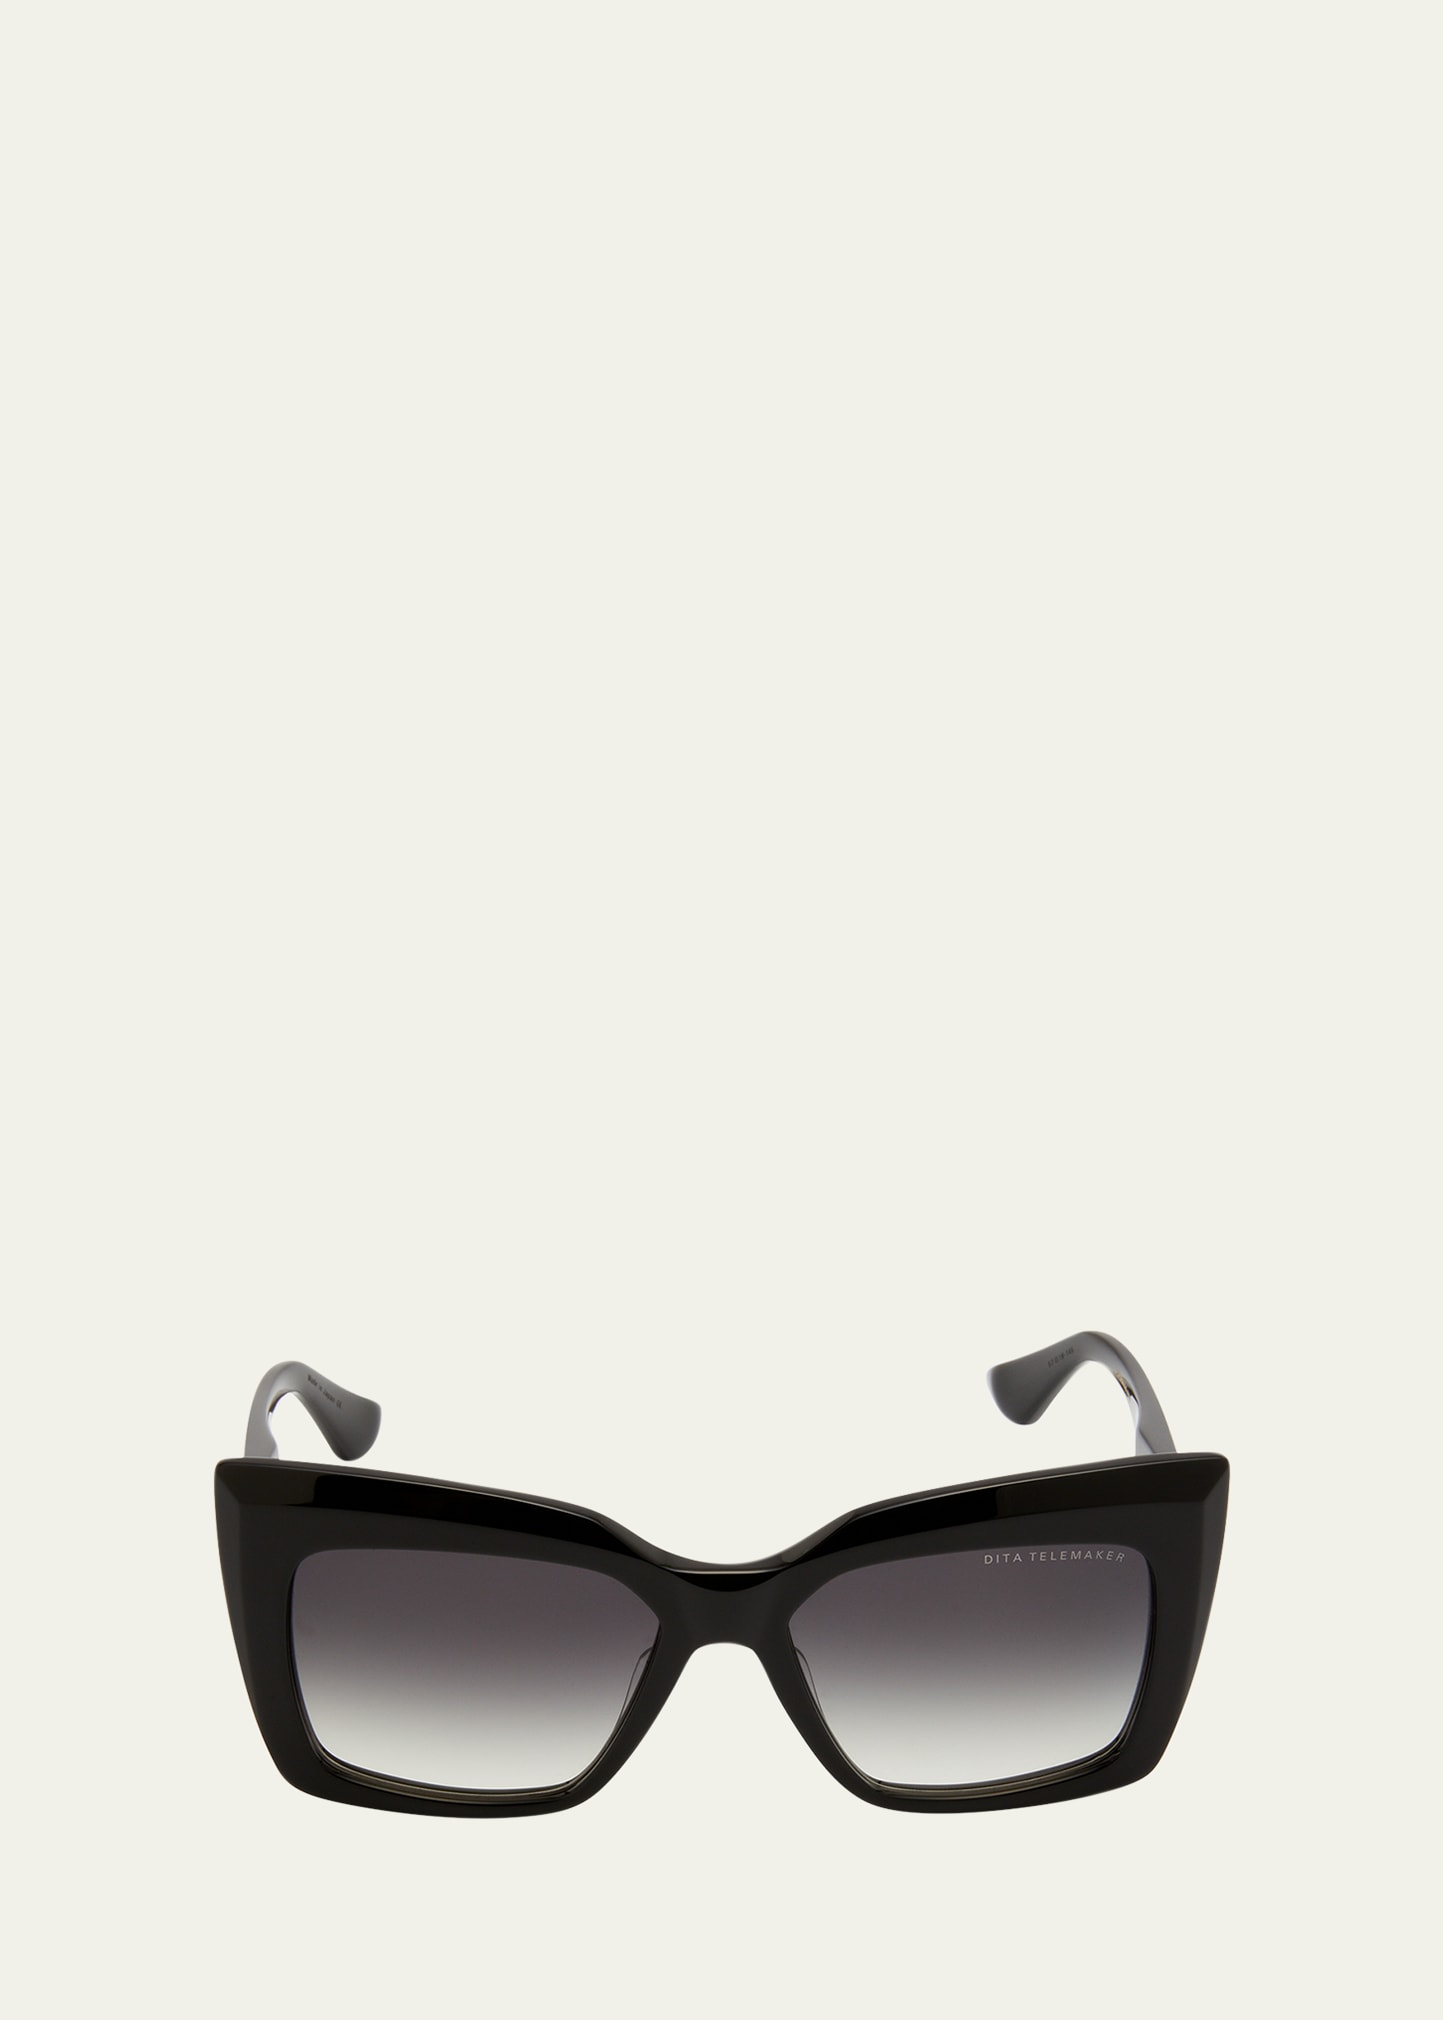 Telemaker Acetate Cat-Eye Sunglasses